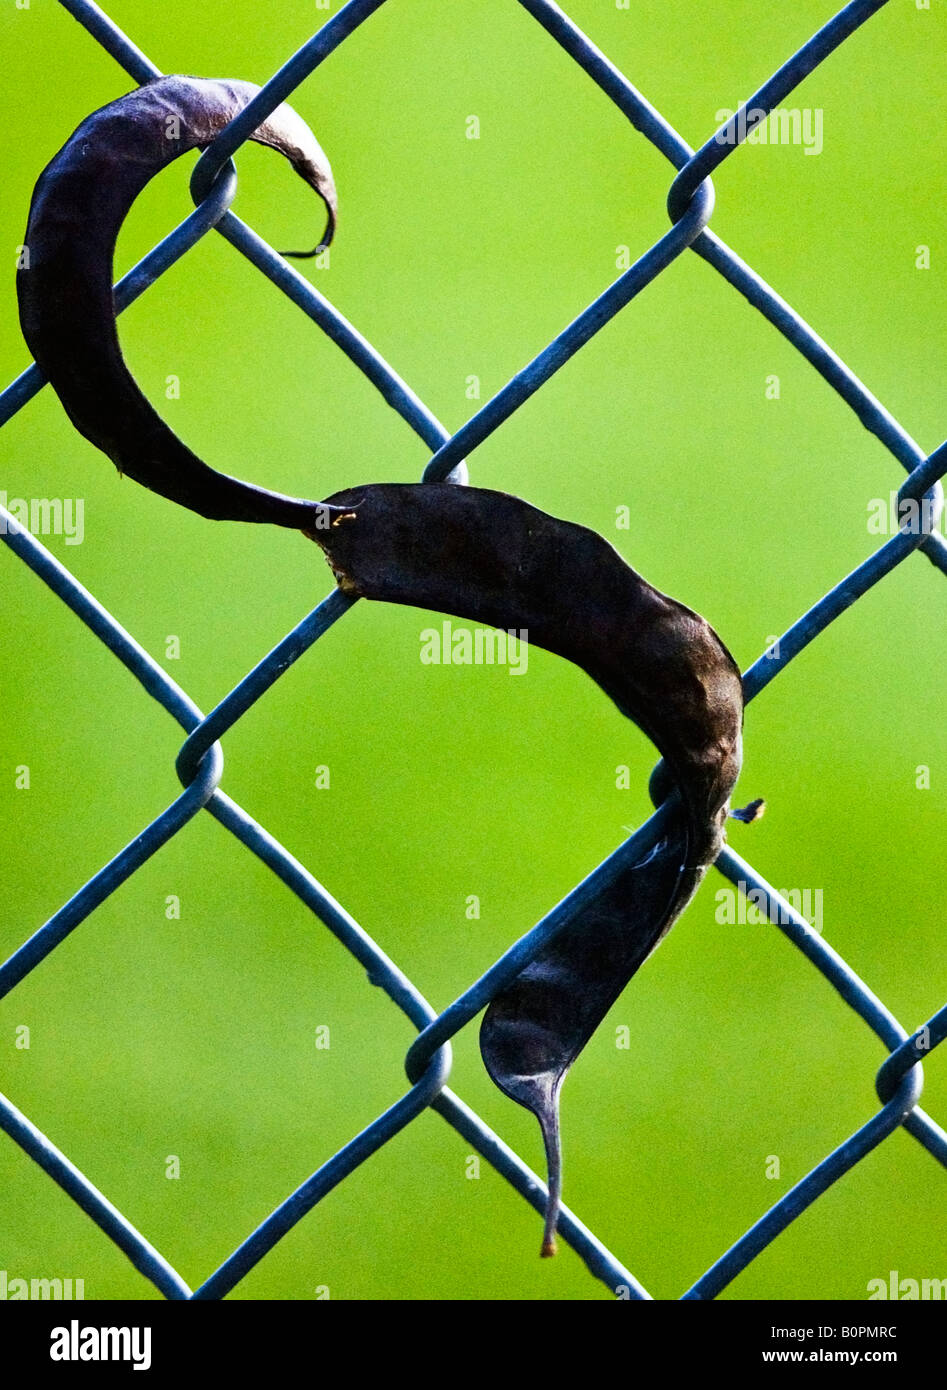 Honeylocust seedpod caught in a chainlink fence Stock Photo